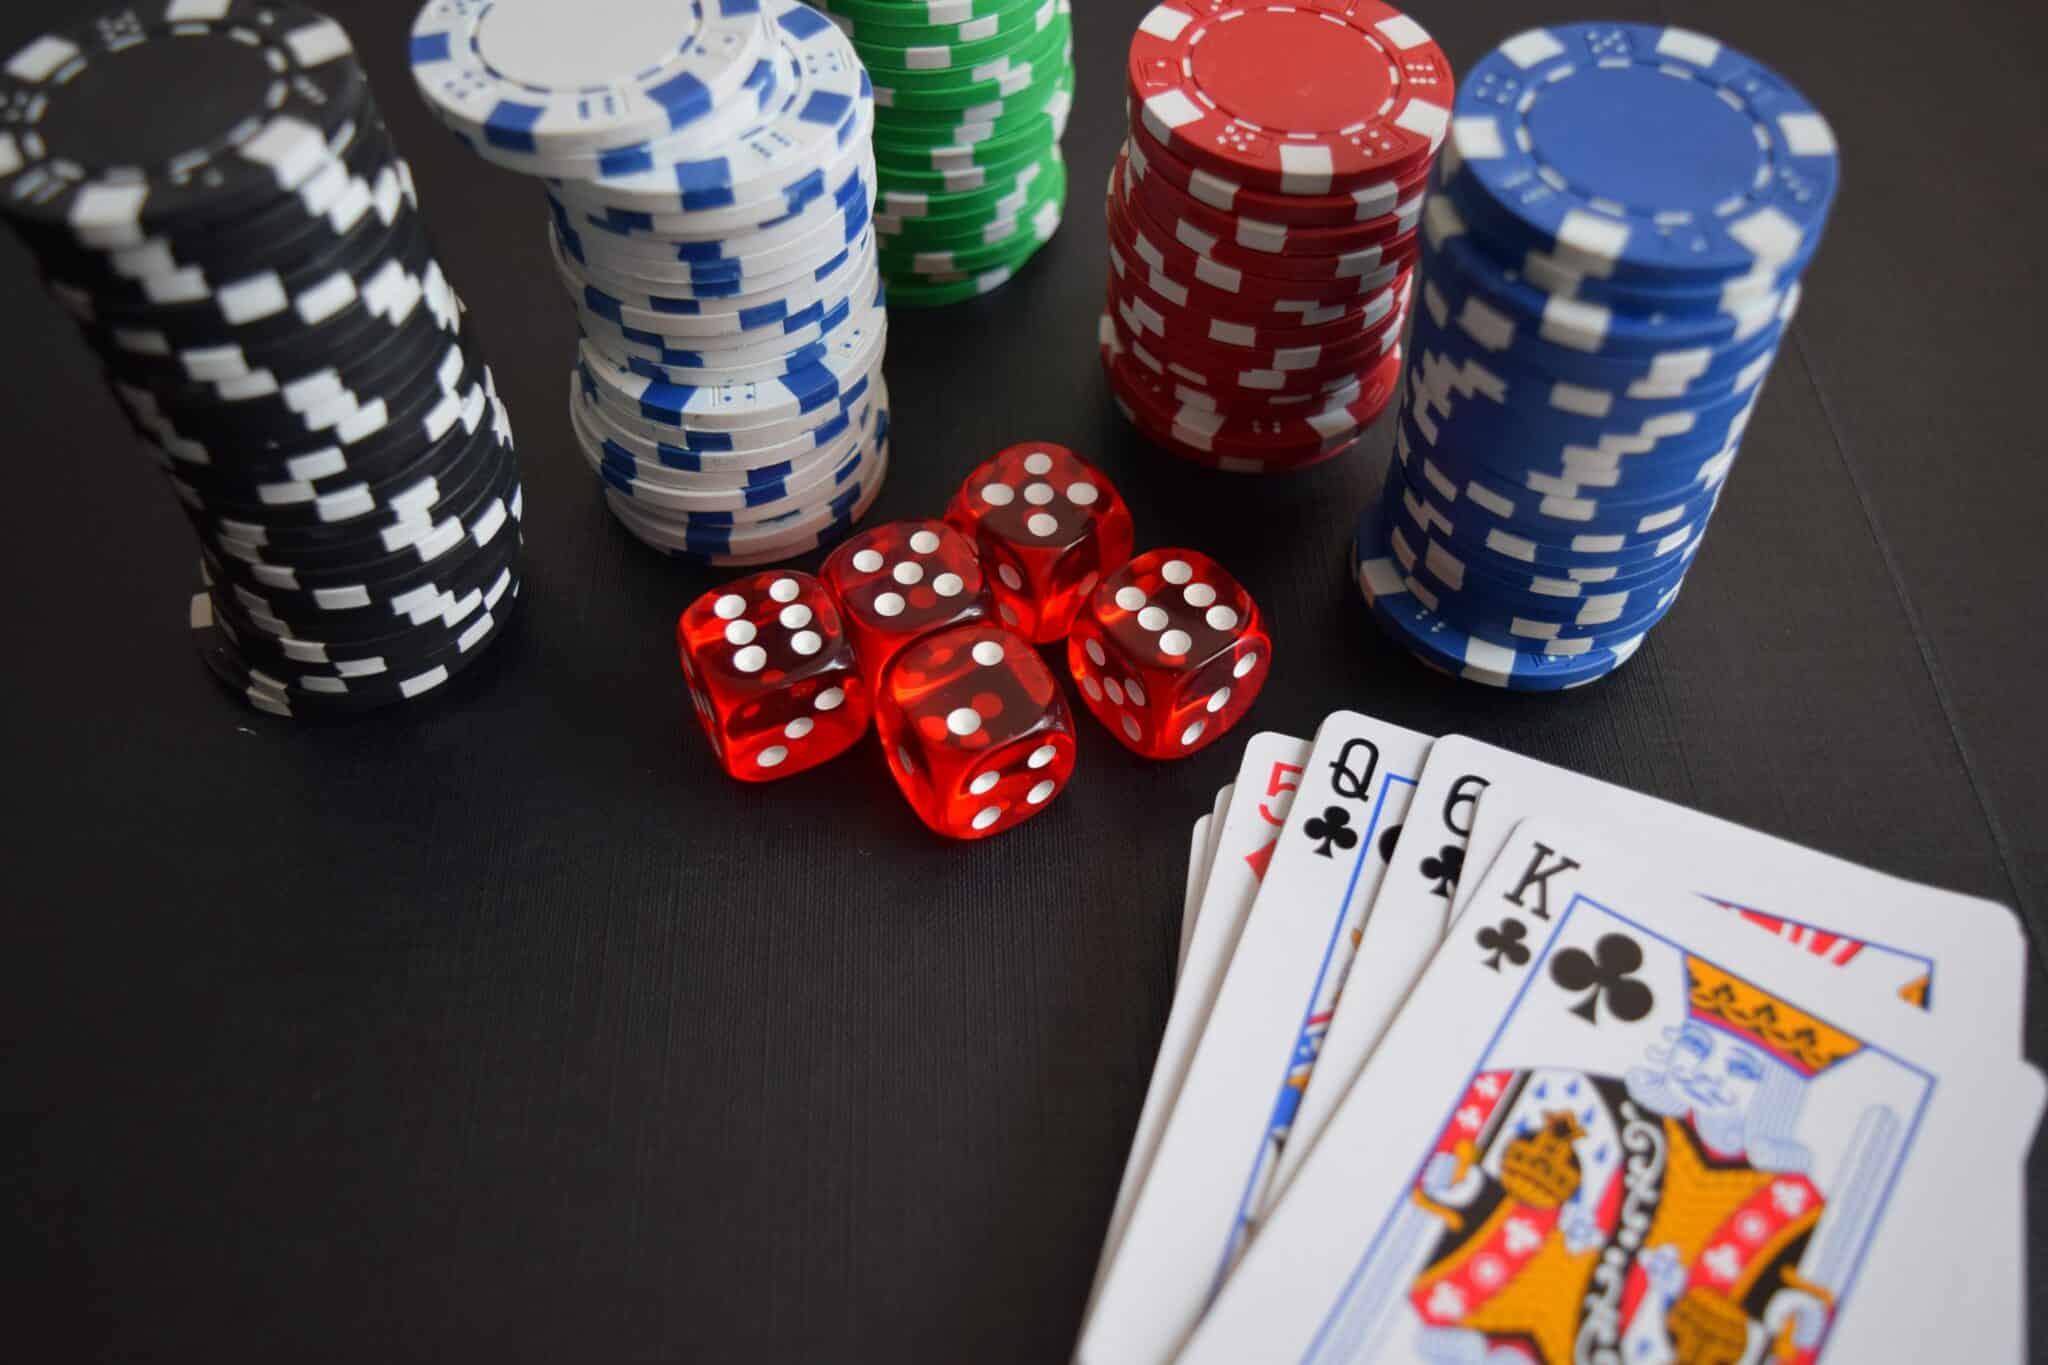 The Rise of Online Casinos: A Digital Gambling Revolution